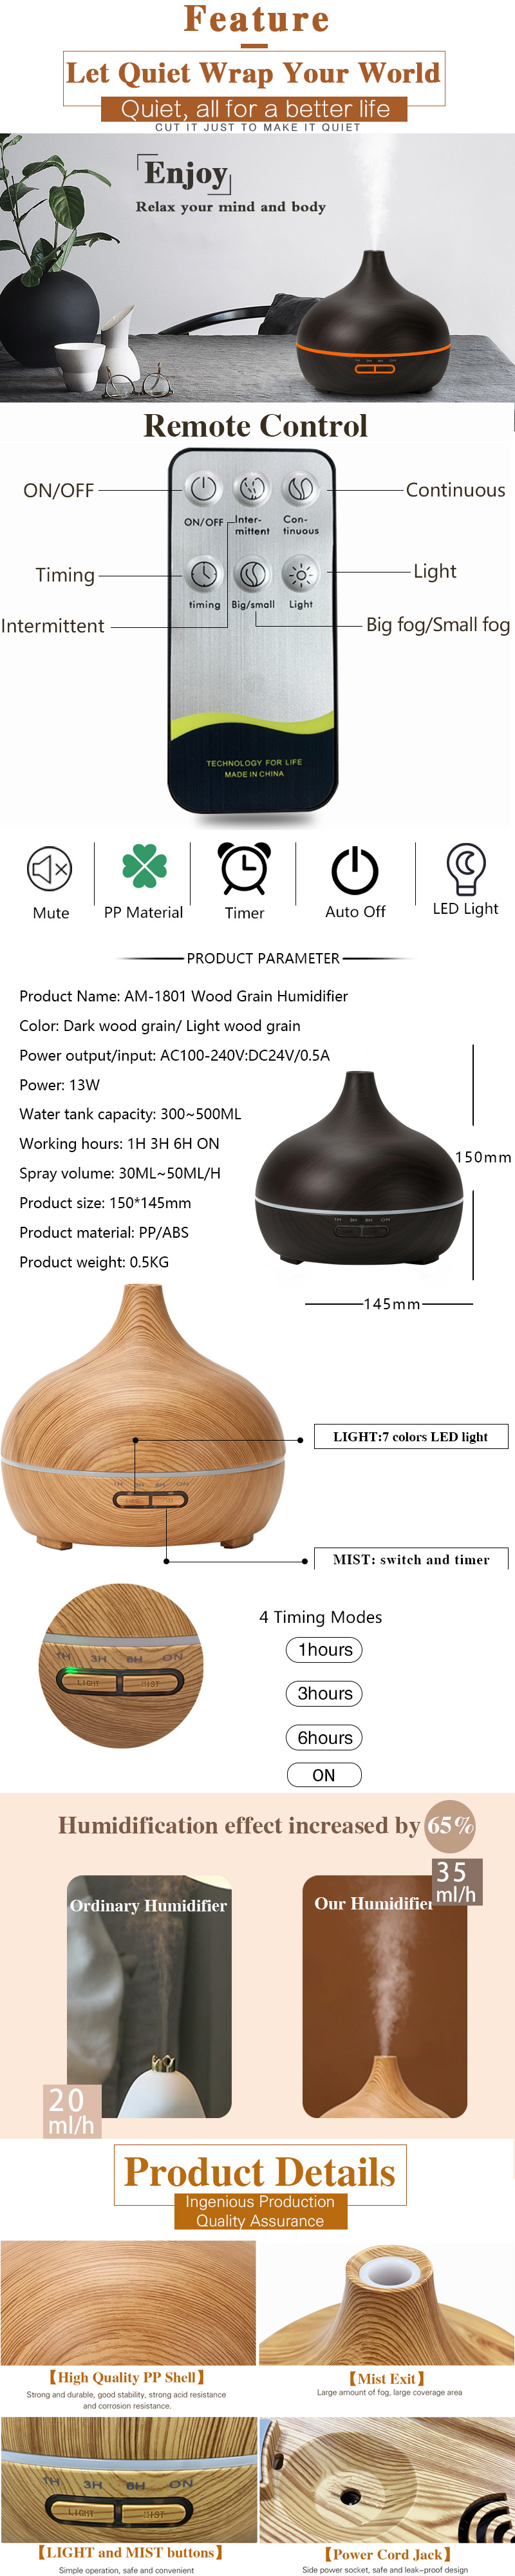 China Wood grain humidifier | ultrasonic aroma humidifier | Wood grain humidifier supplier